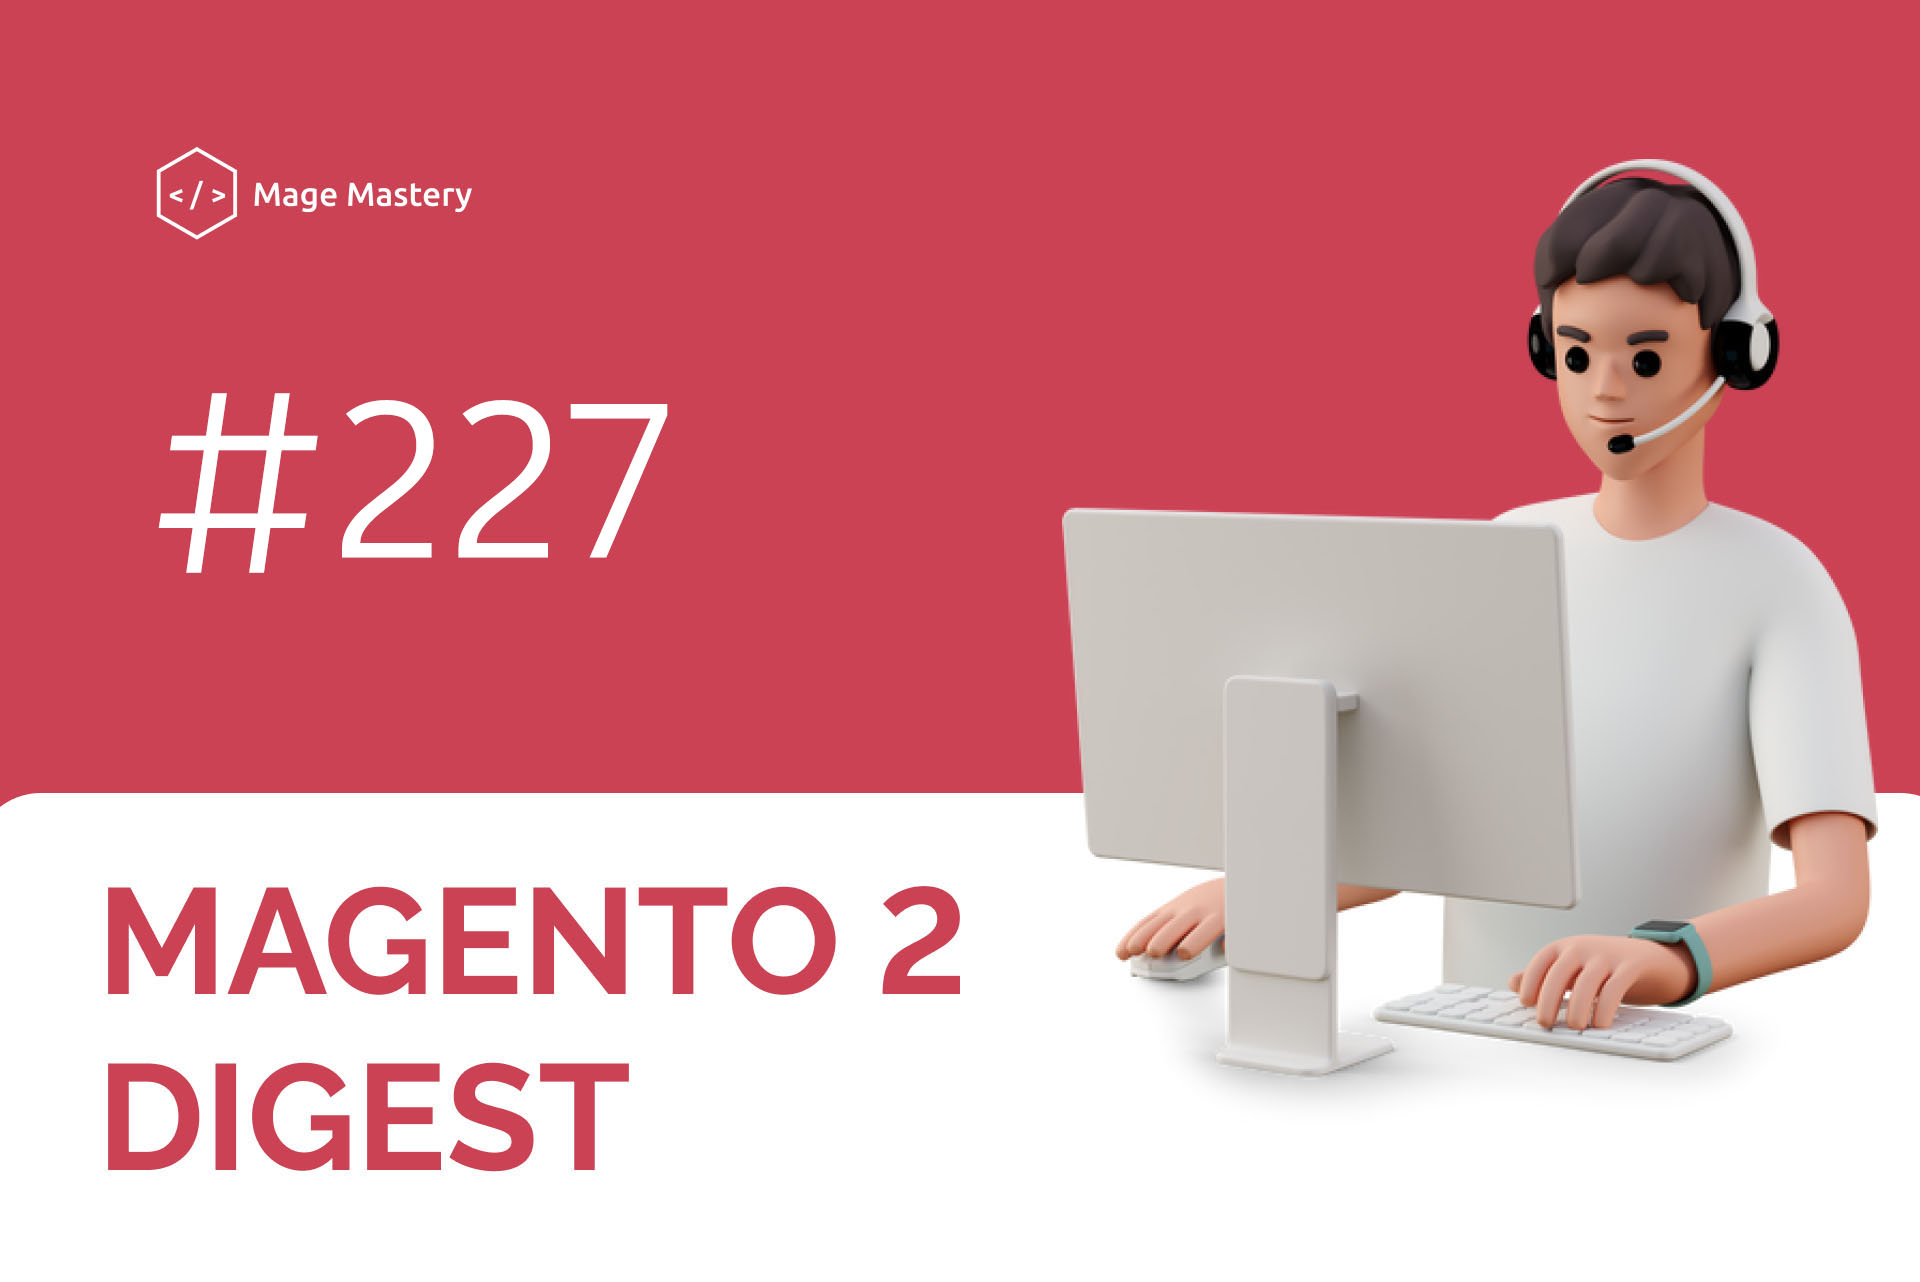 Magento Tech Digest #227